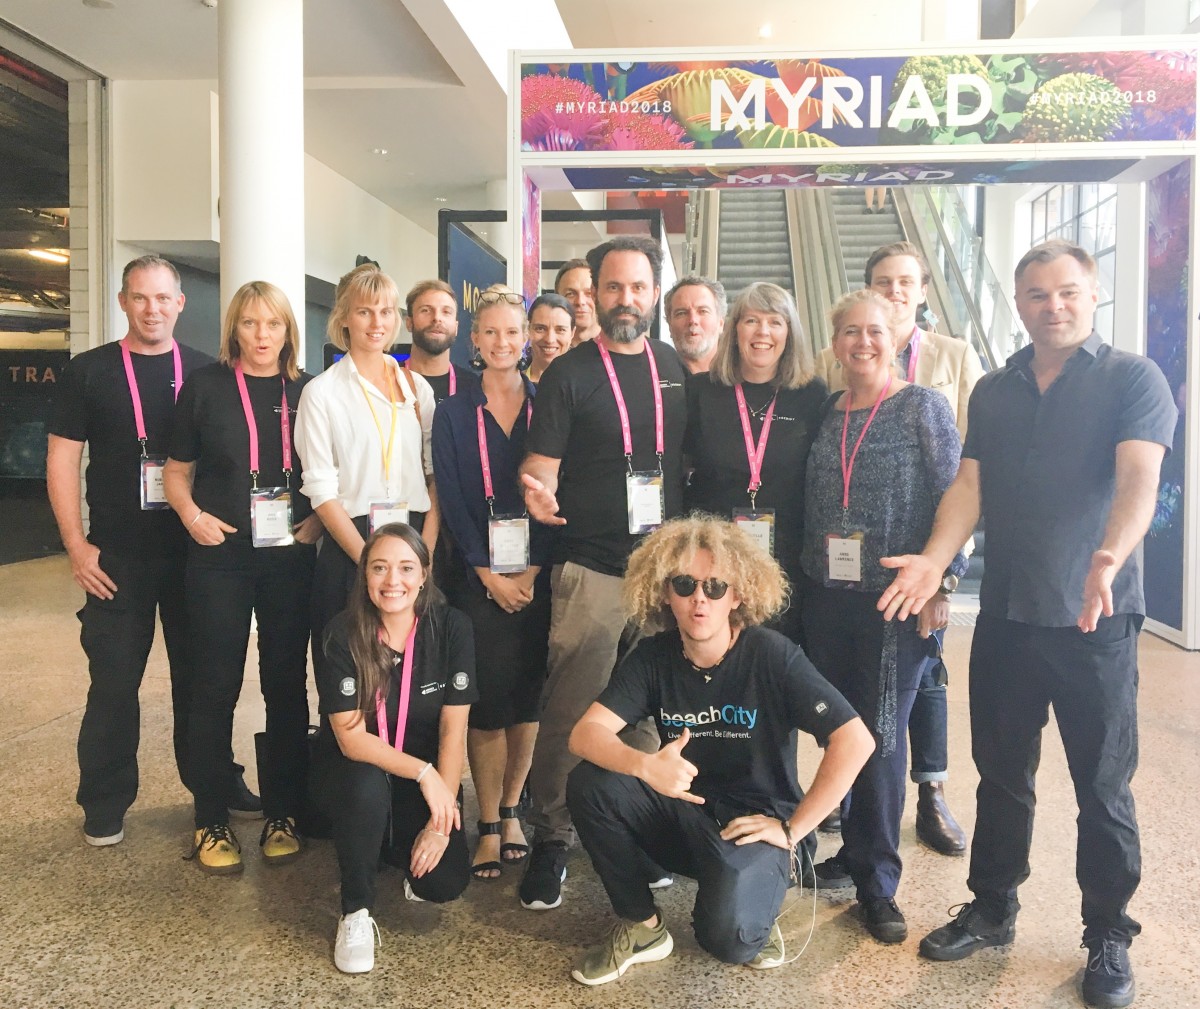 Sunshine Coast representatives at Myriad 2018